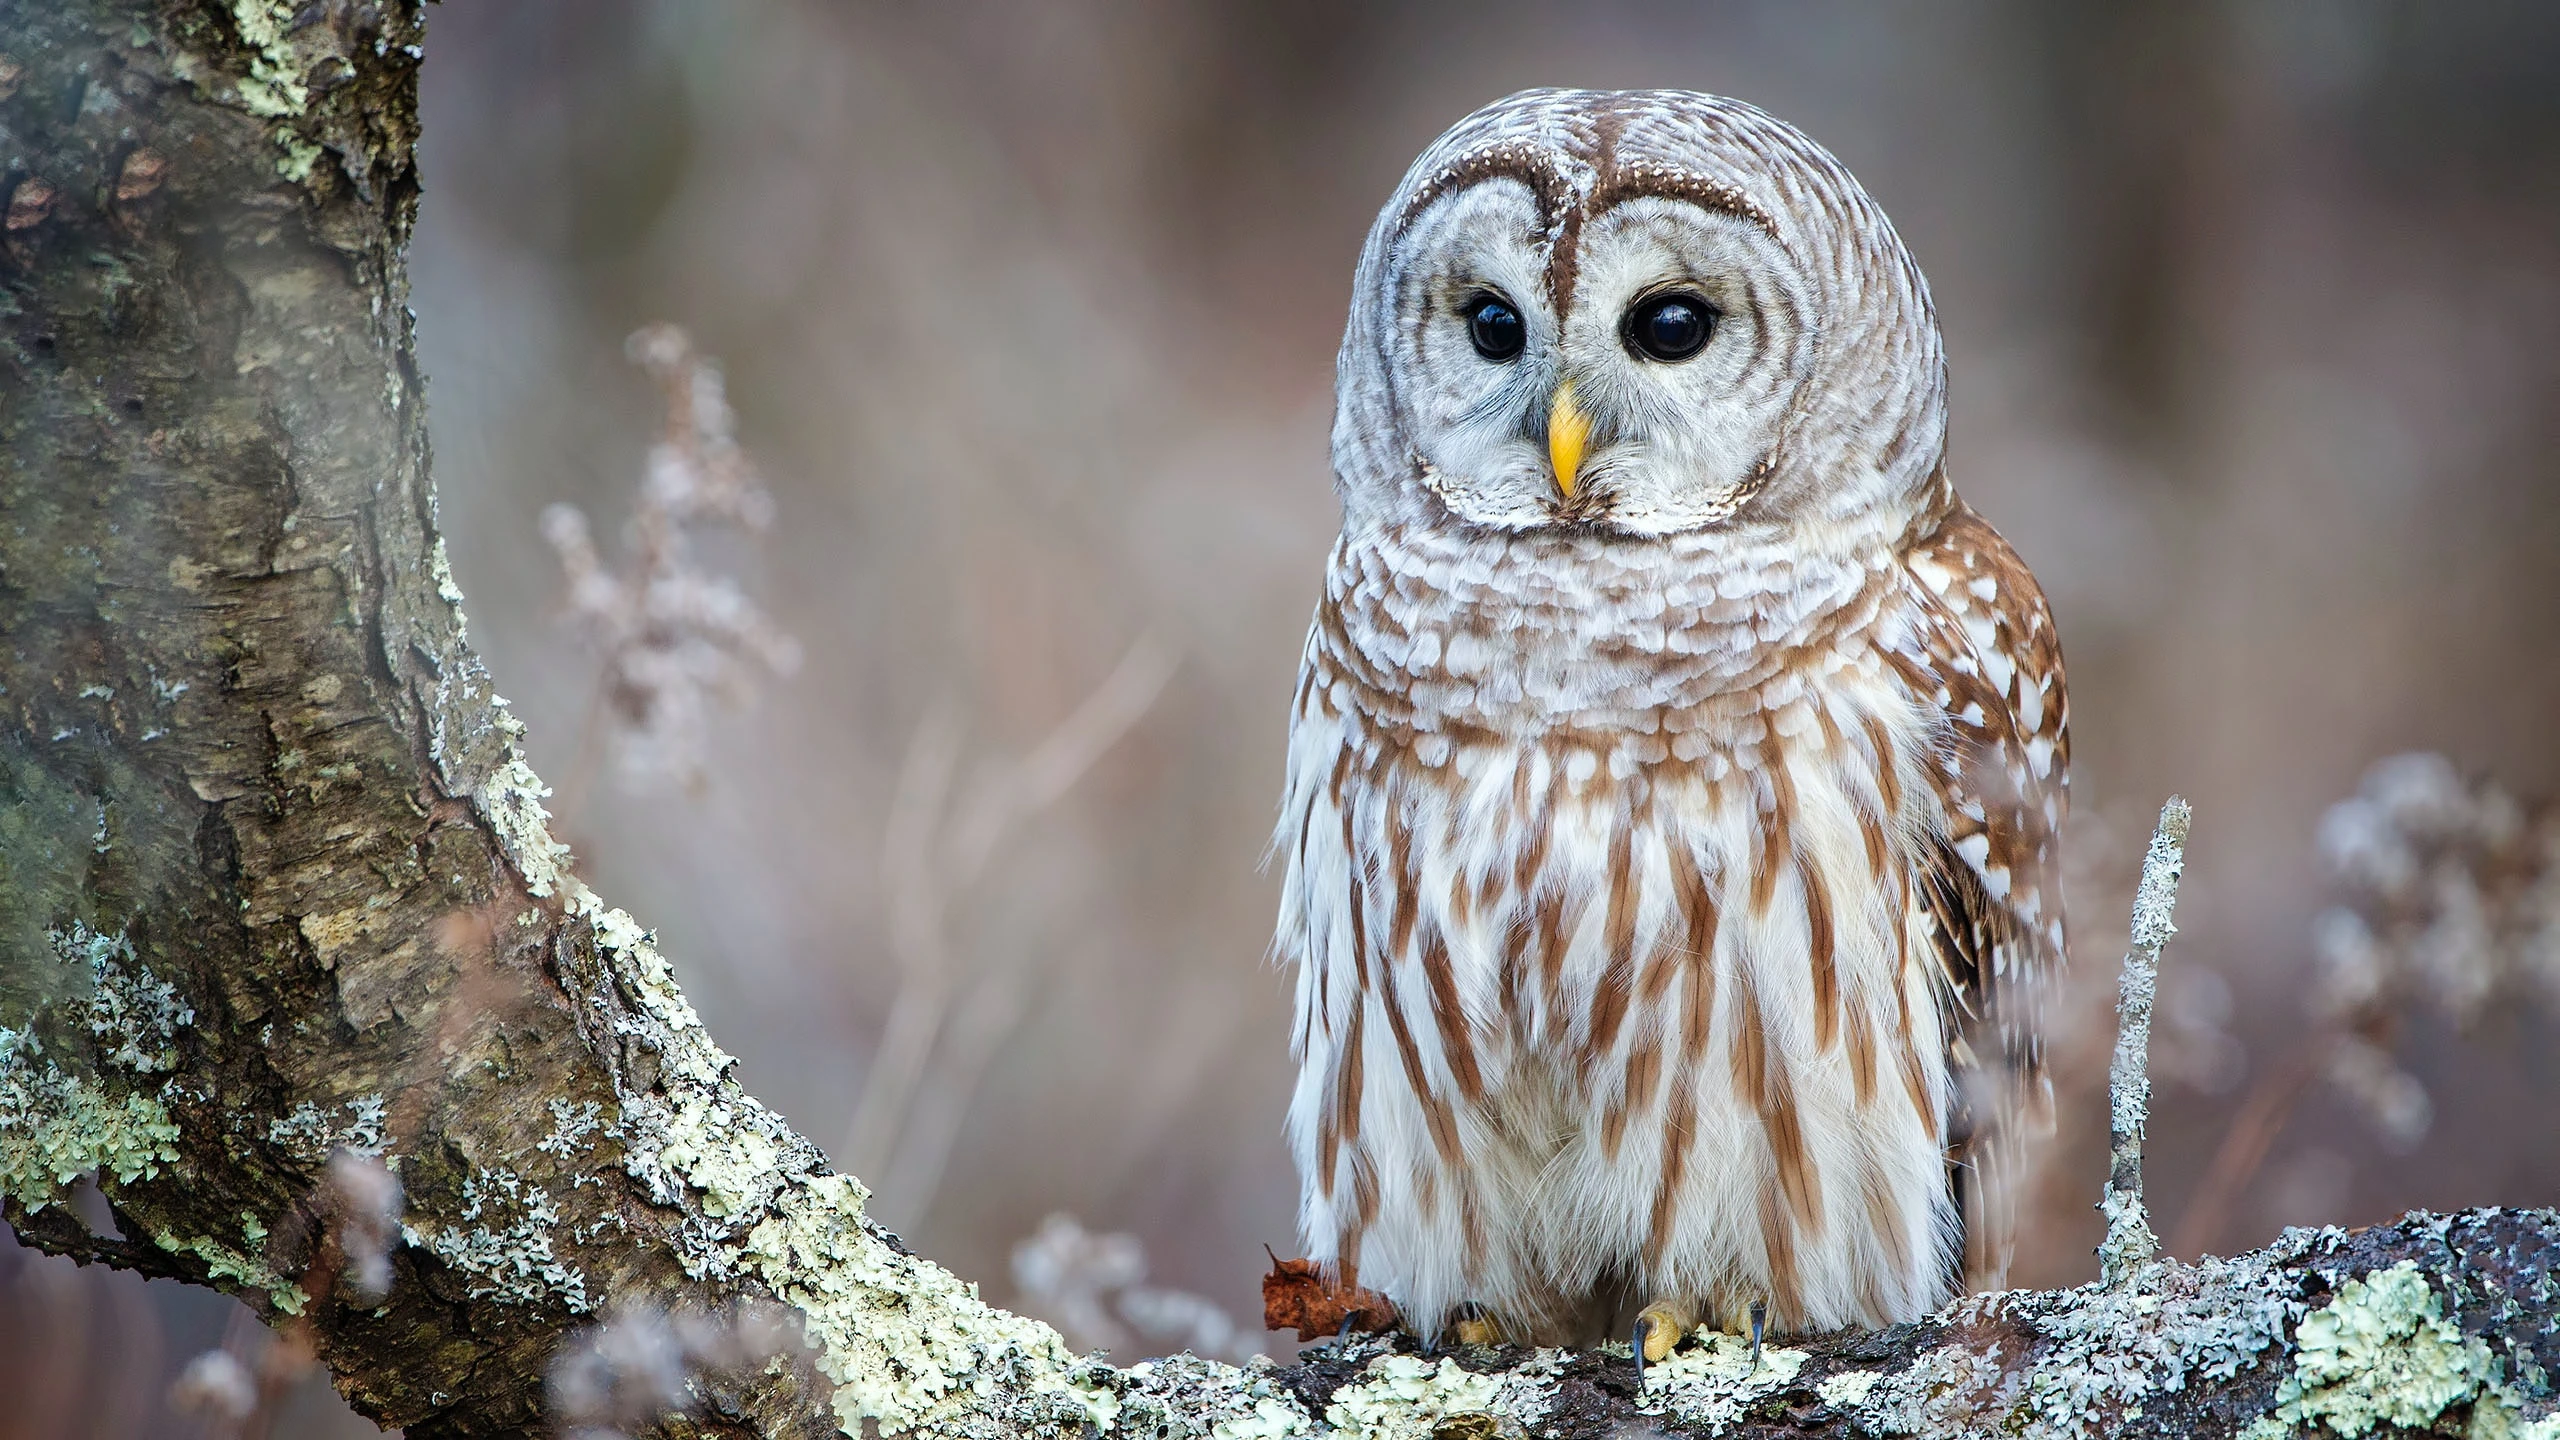 philip-brown-Barred Owl-unsplash